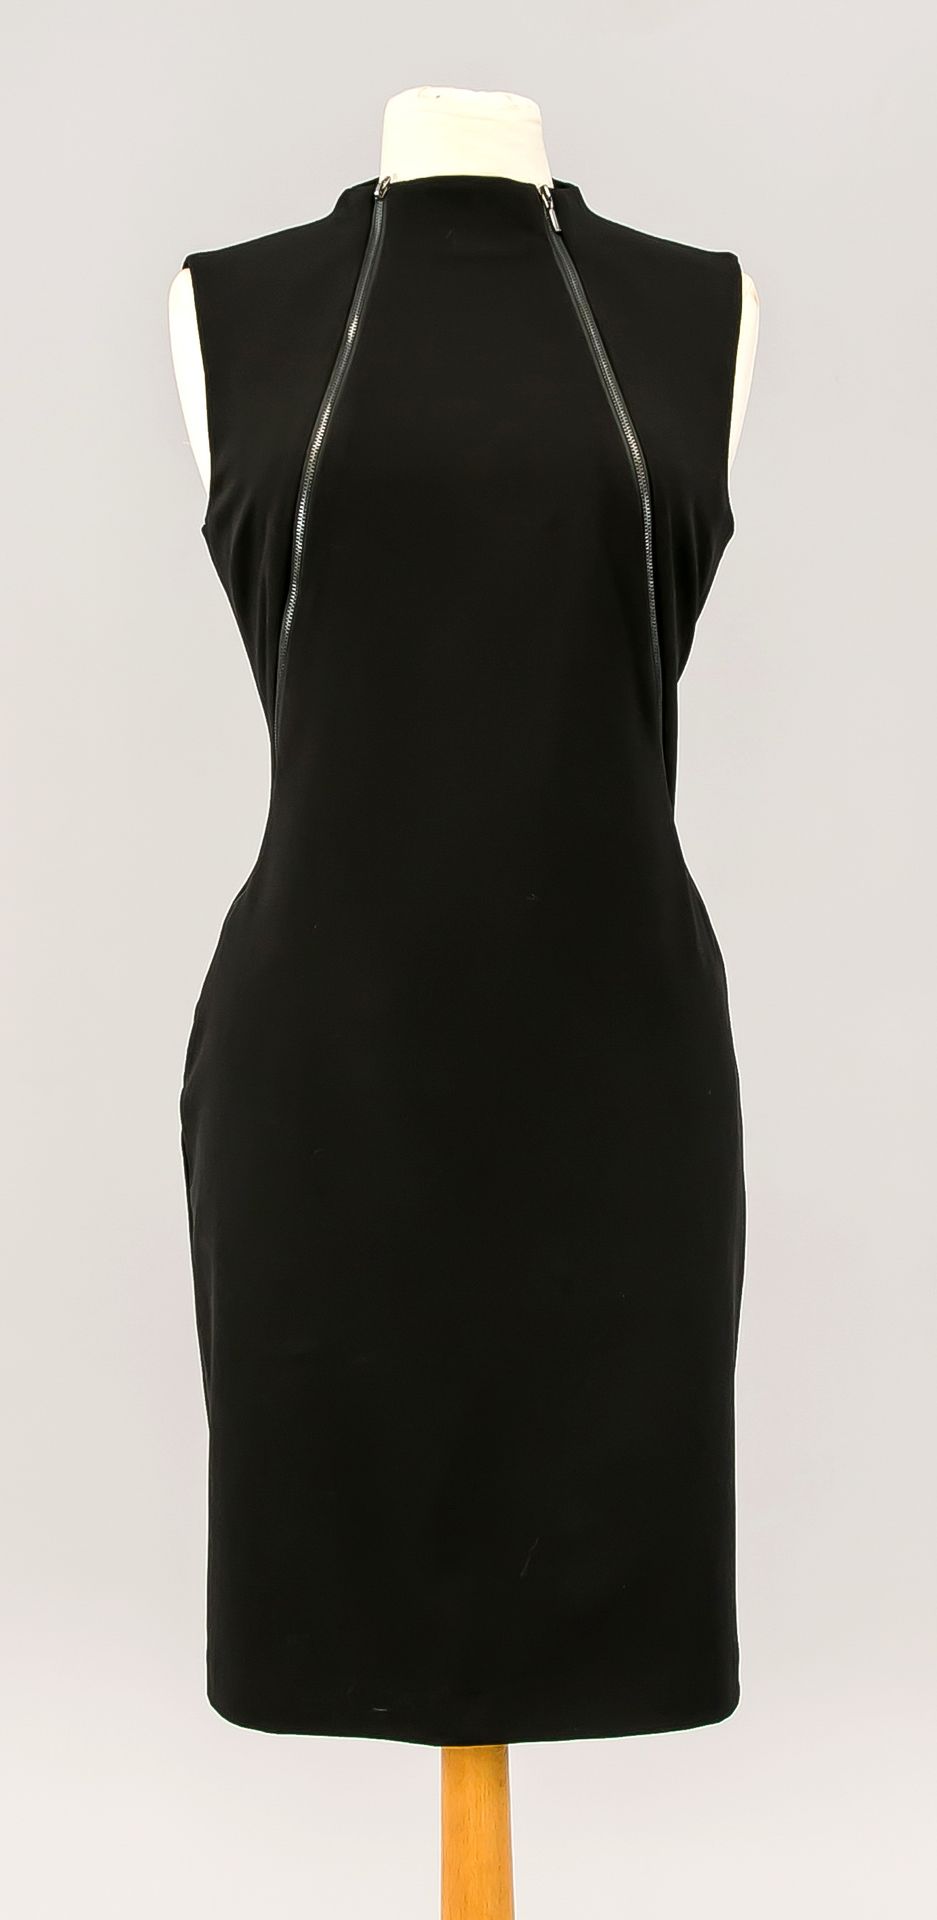 Null 连衣裙，Calvin Klein，10号，黑色，前面有拉链。状况良好，有轻微磨损痕迹